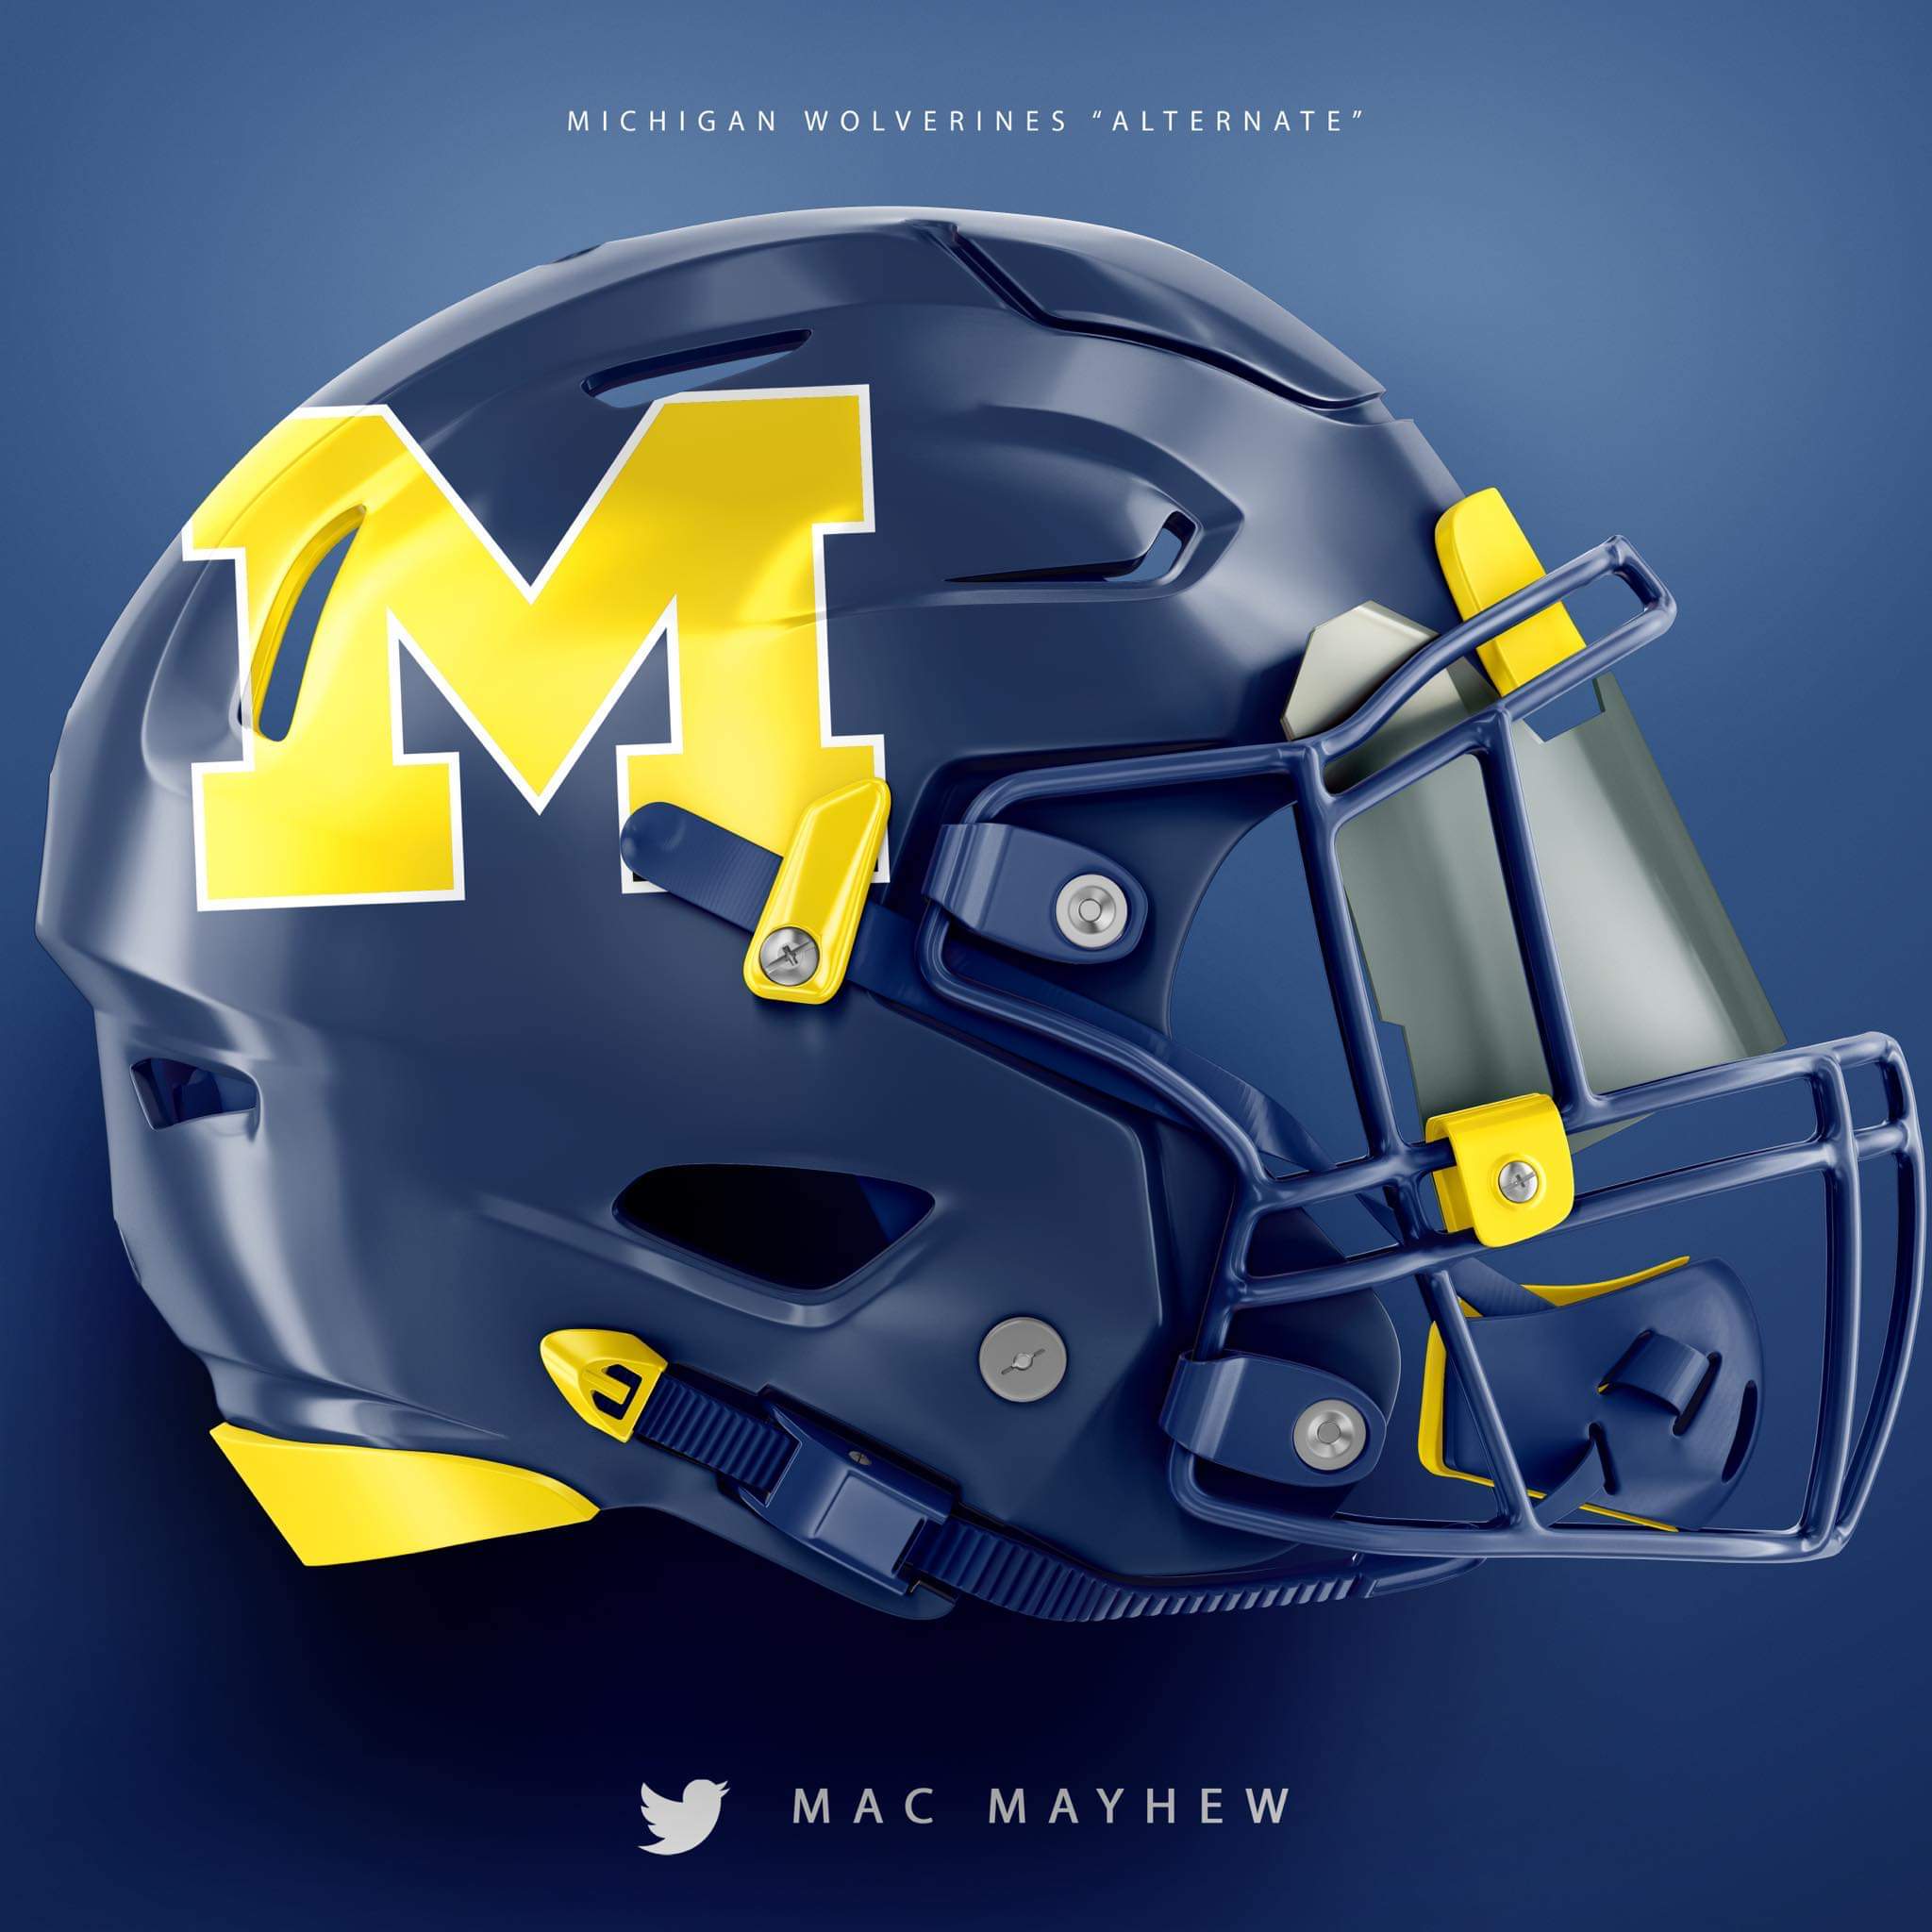 U of M: Michigan concept helmet may make you rethink tradition [Photo